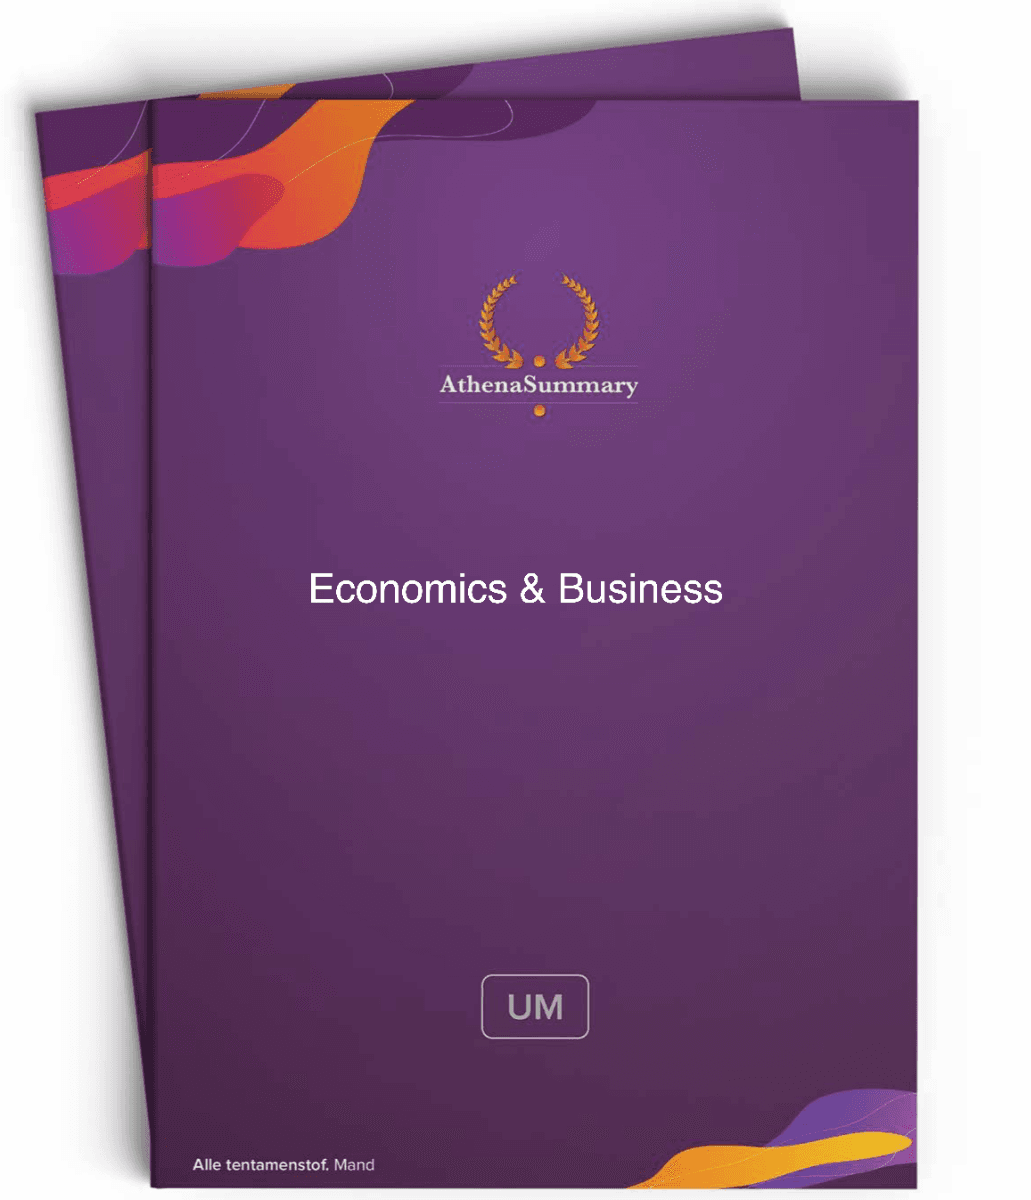 Literature Summary: Economics & Business